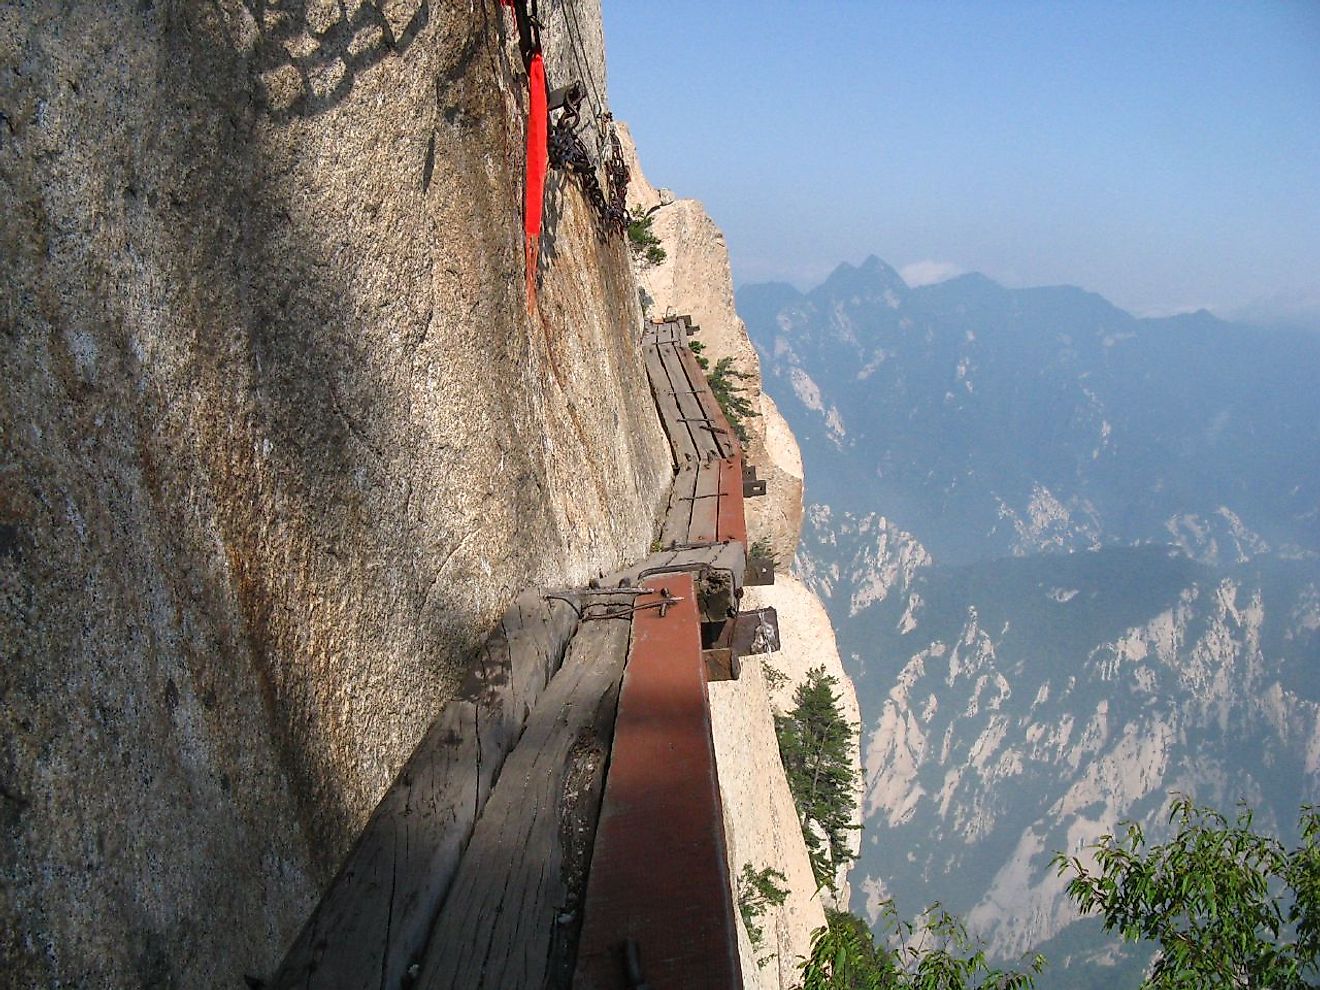 Hiking plank along the Mount Huashan, China. Image credit: Ianz/Flickr.com